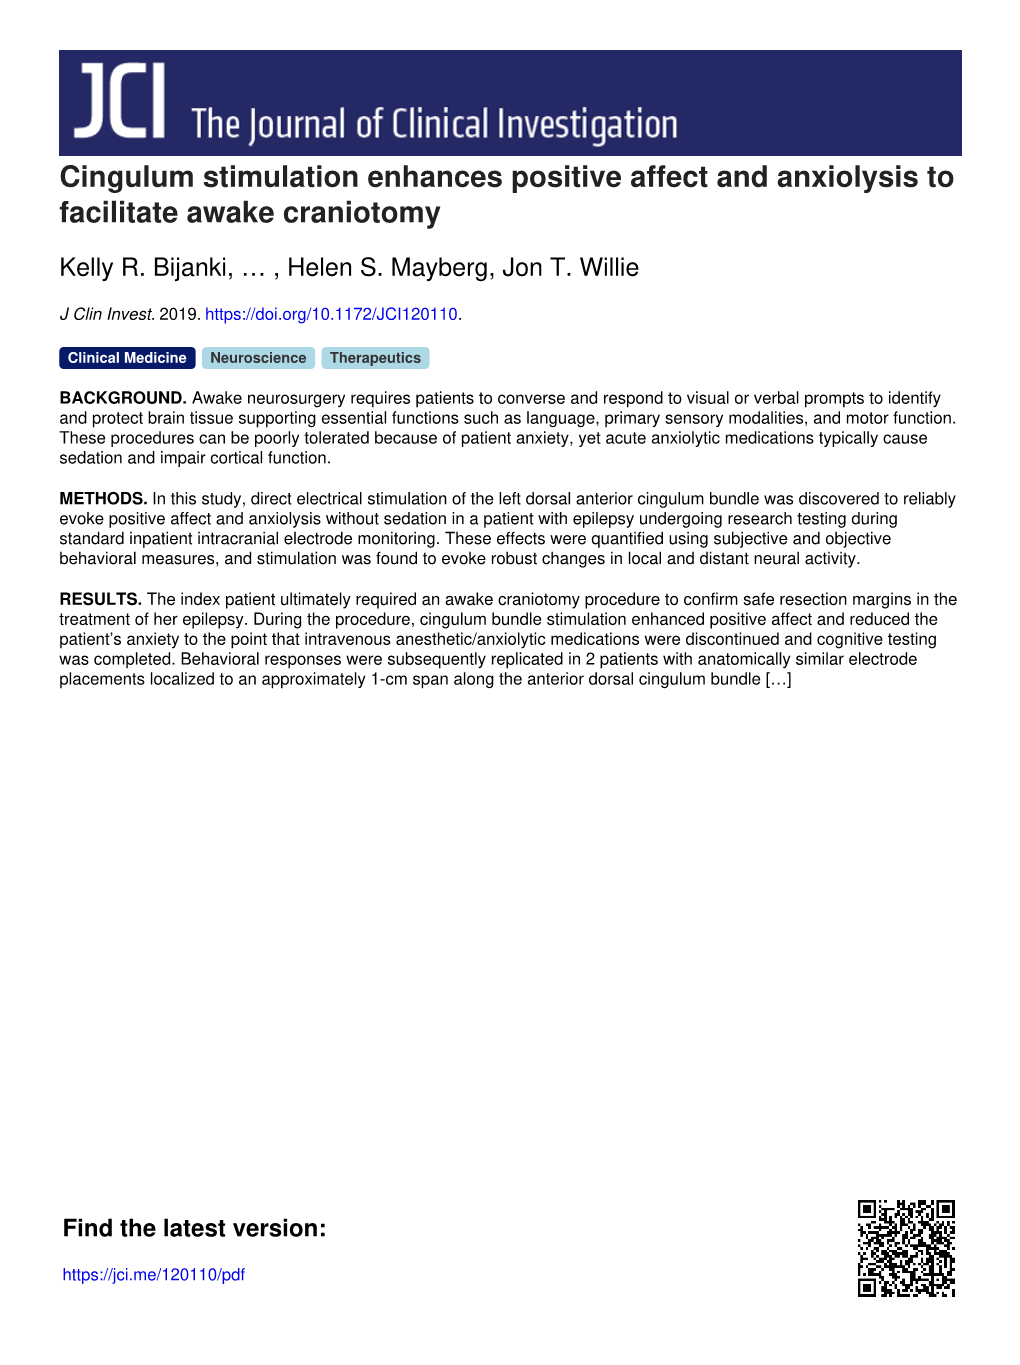 Cingulum Stimulation Enhances Positive Affect and Anxiolysis to Facilitate Awake Craniotomy